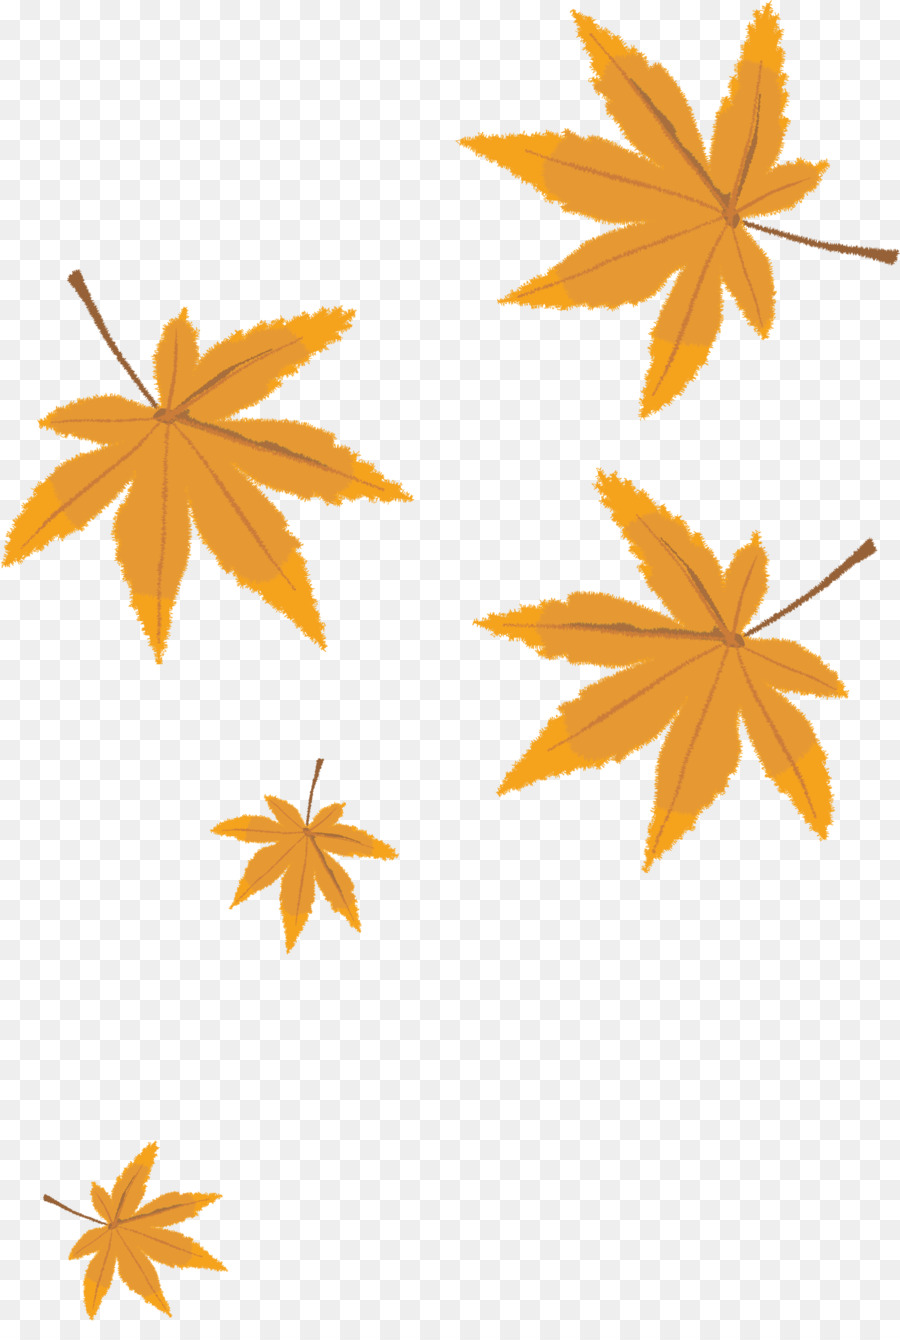 Leaf Cartoon - Autumn leaves png vector material png download - 1637*2403 - Free Transparent Leaf png Download.